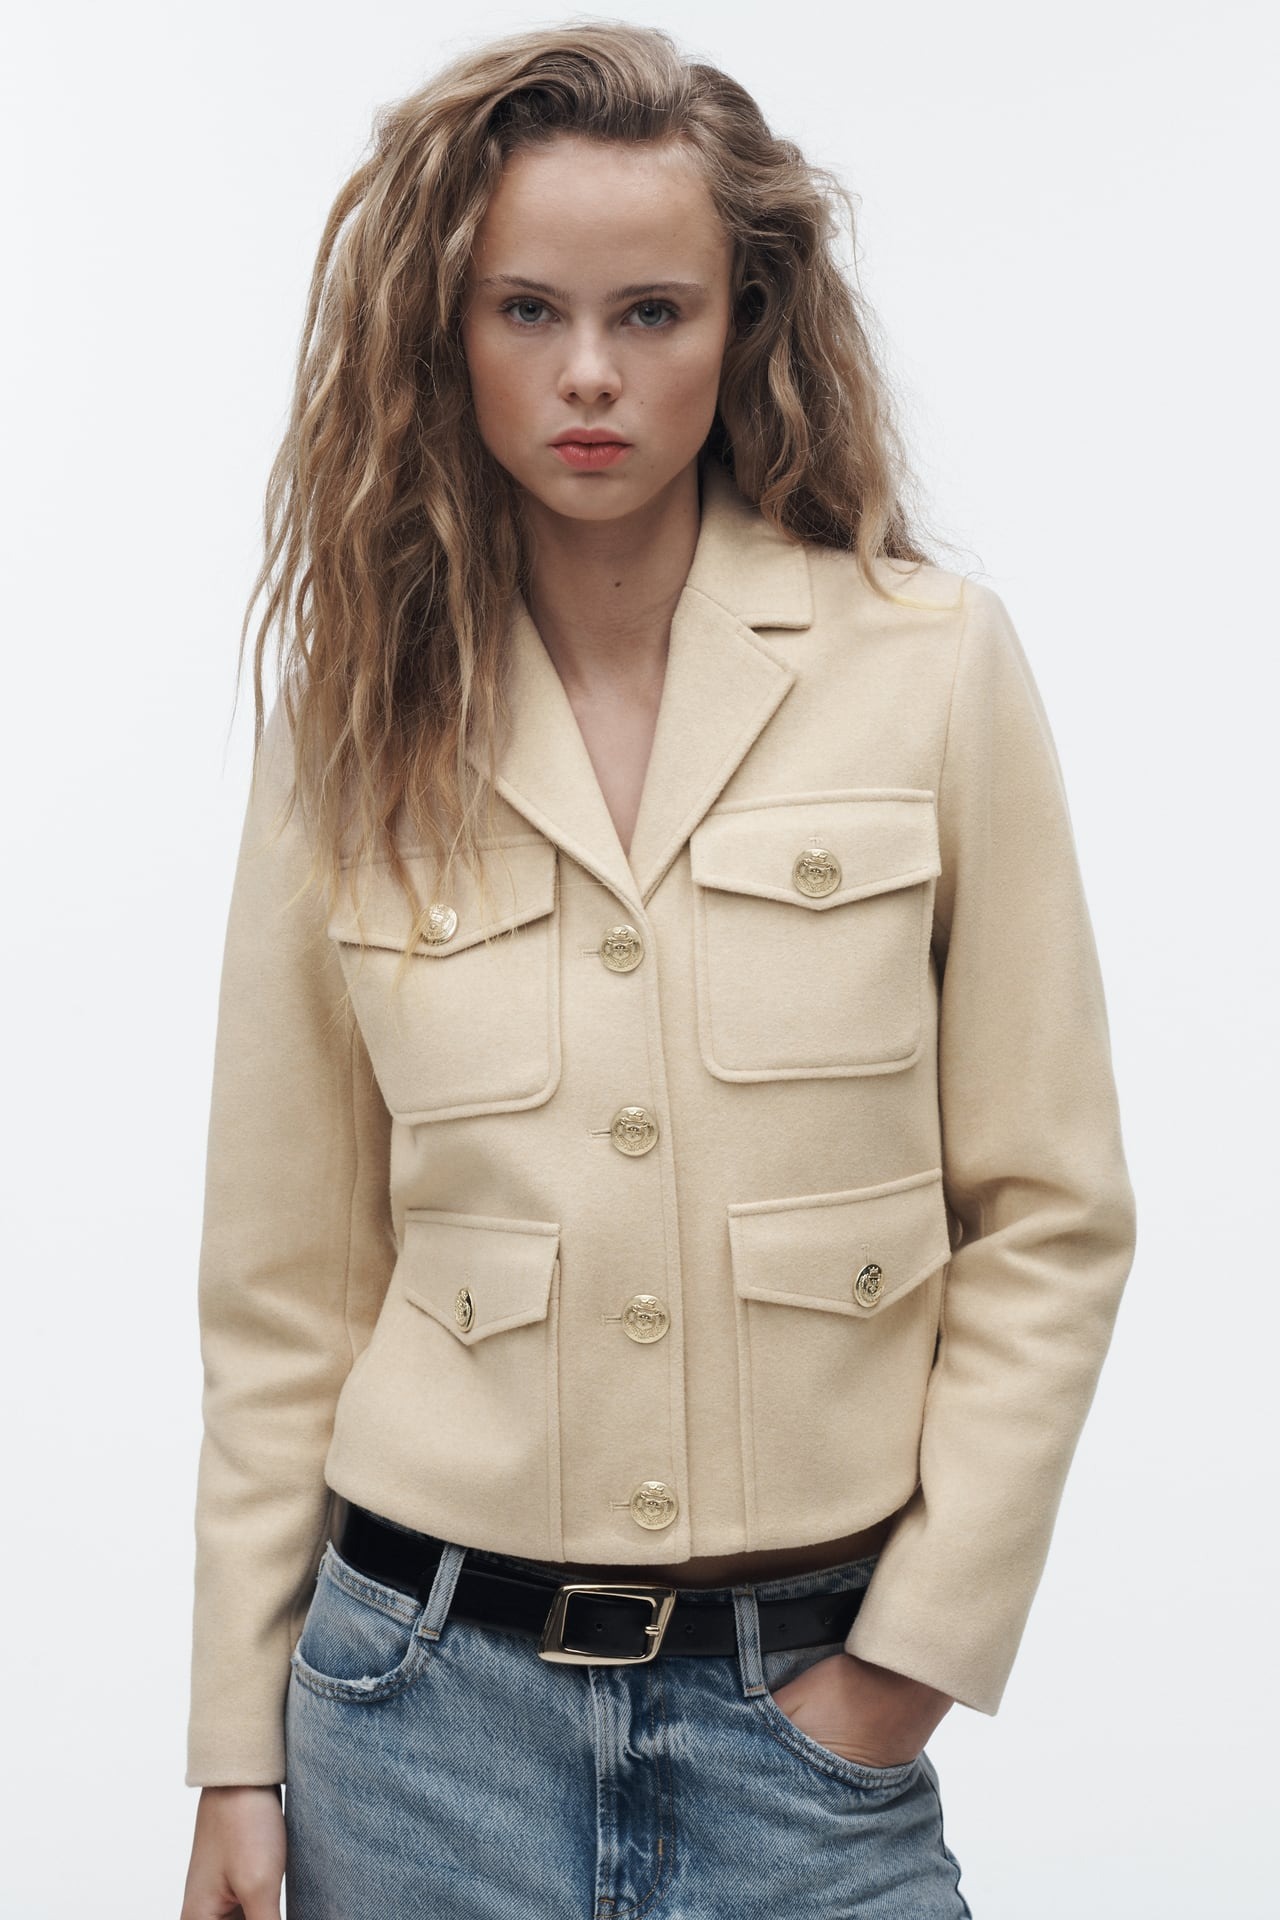 Zara Cropped Gold Button Jacket